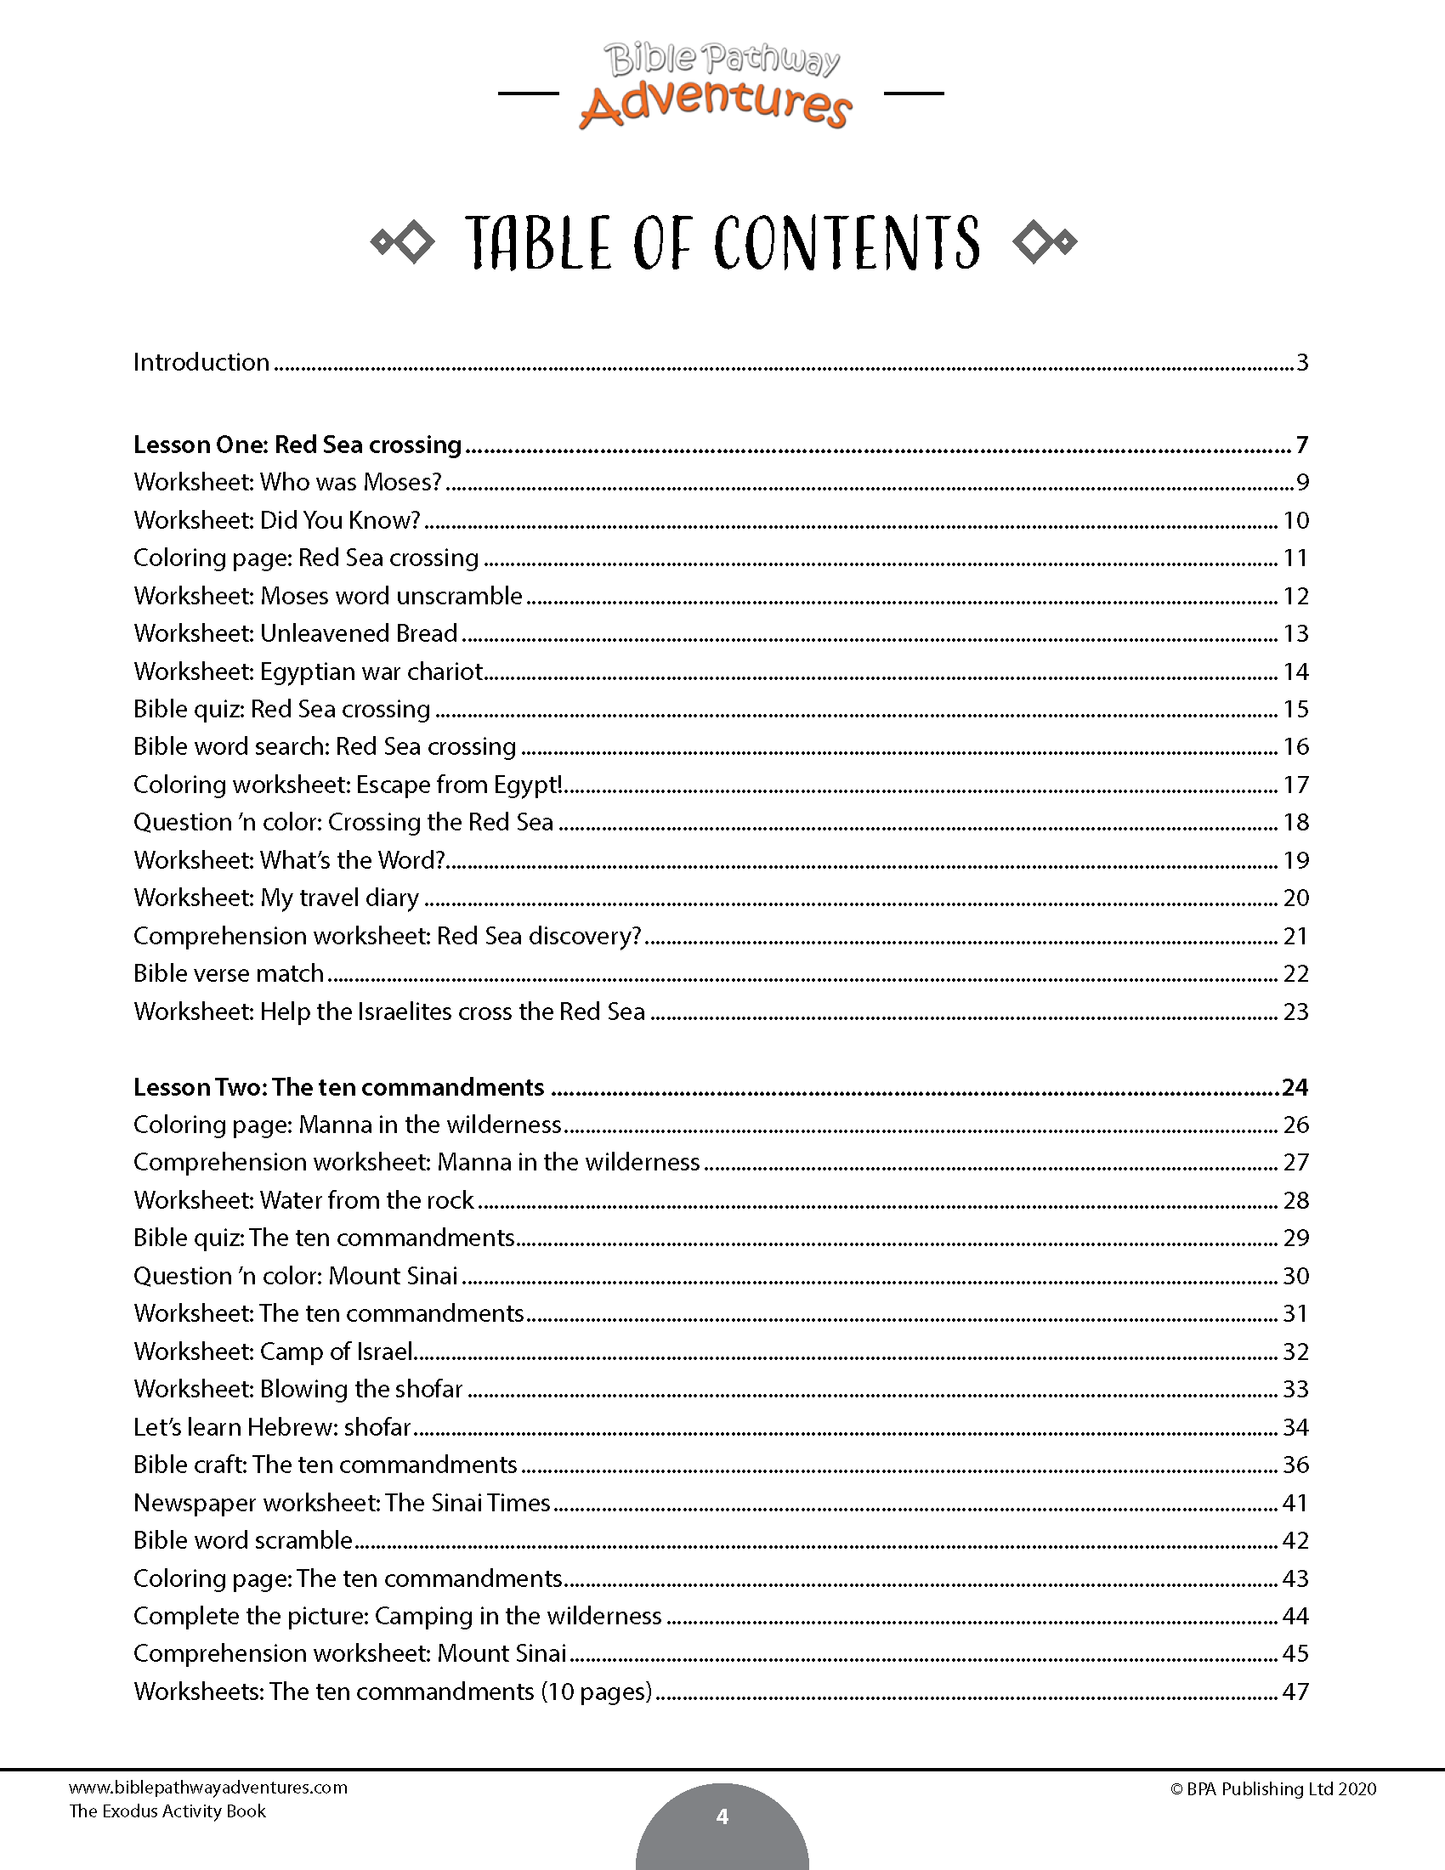 The Exodus Activity Book (PDF)